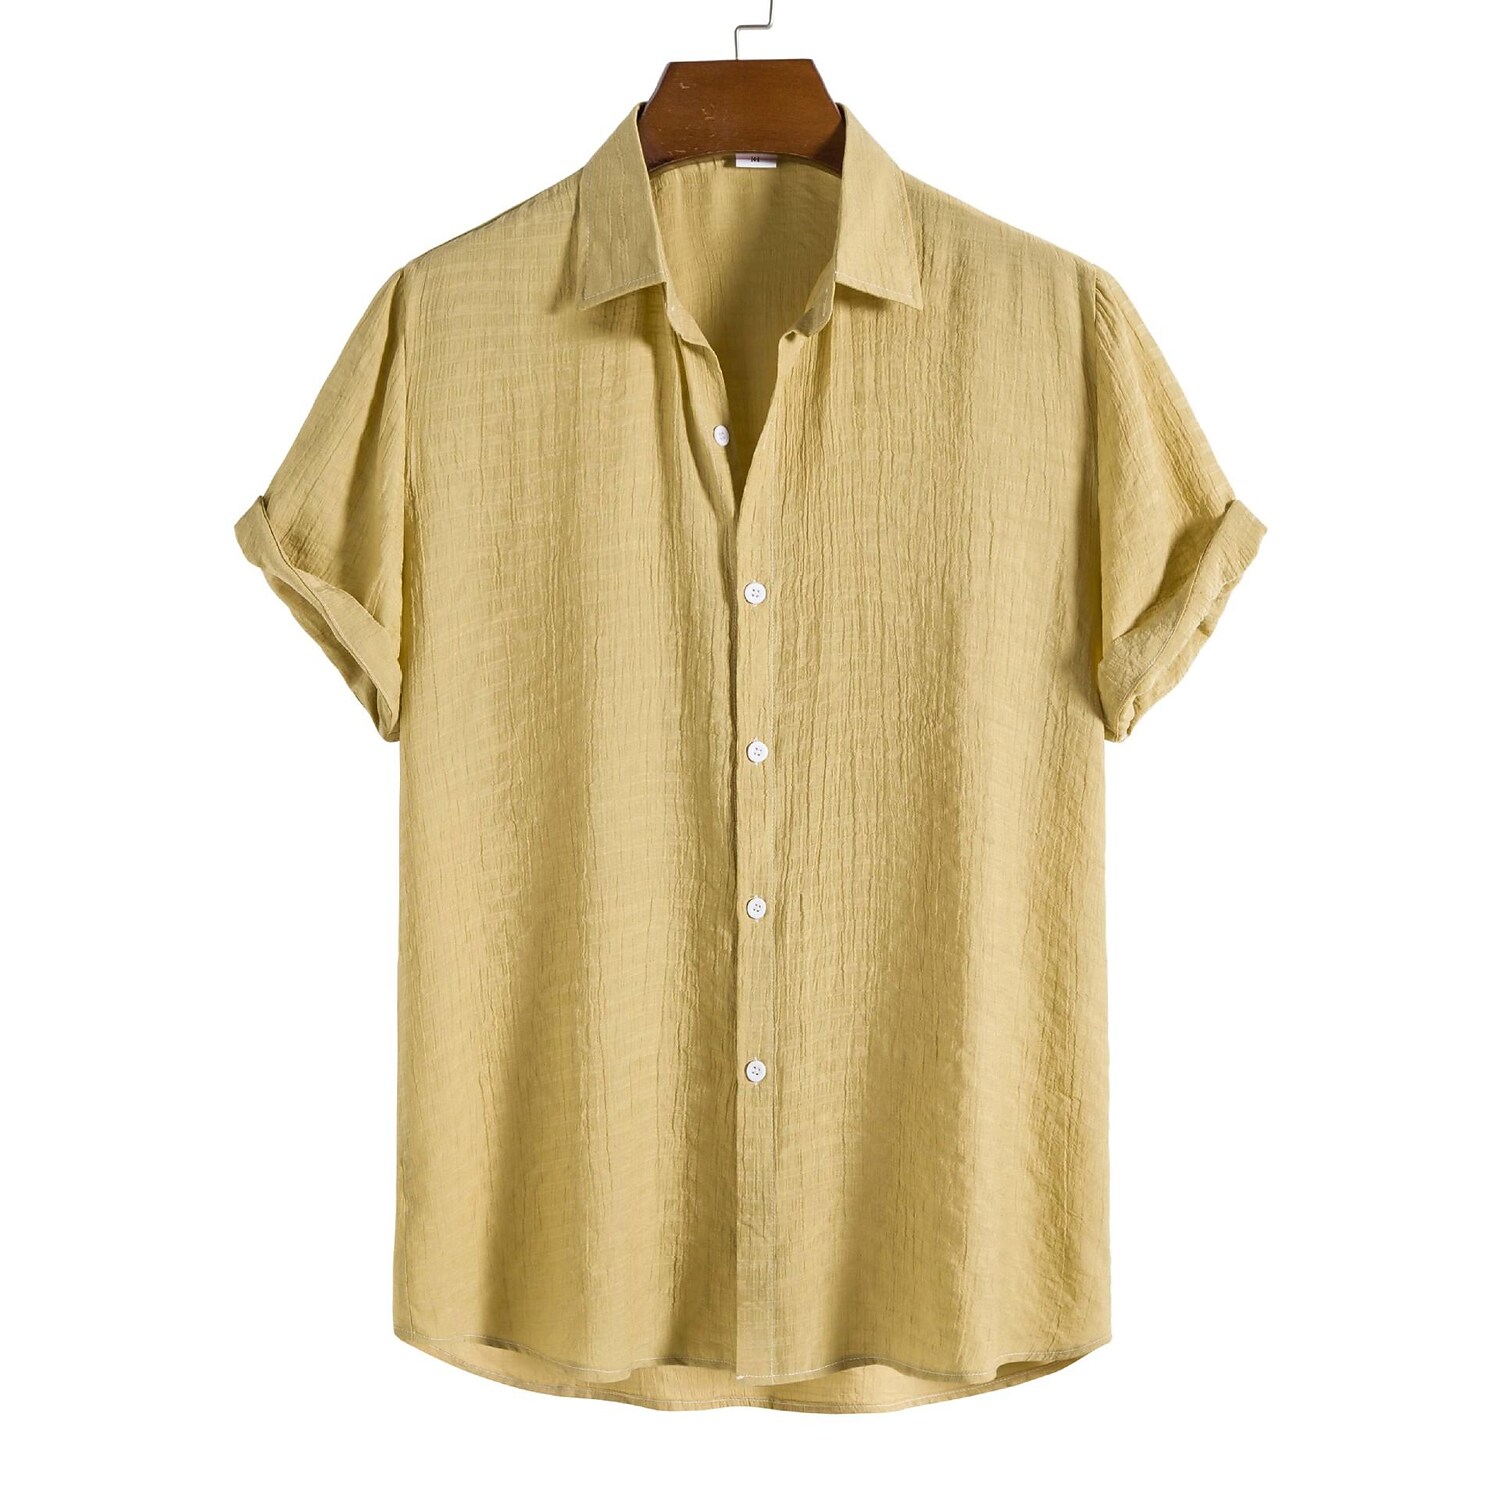 Men's Solid Color Textured Short-sleeved Shirt